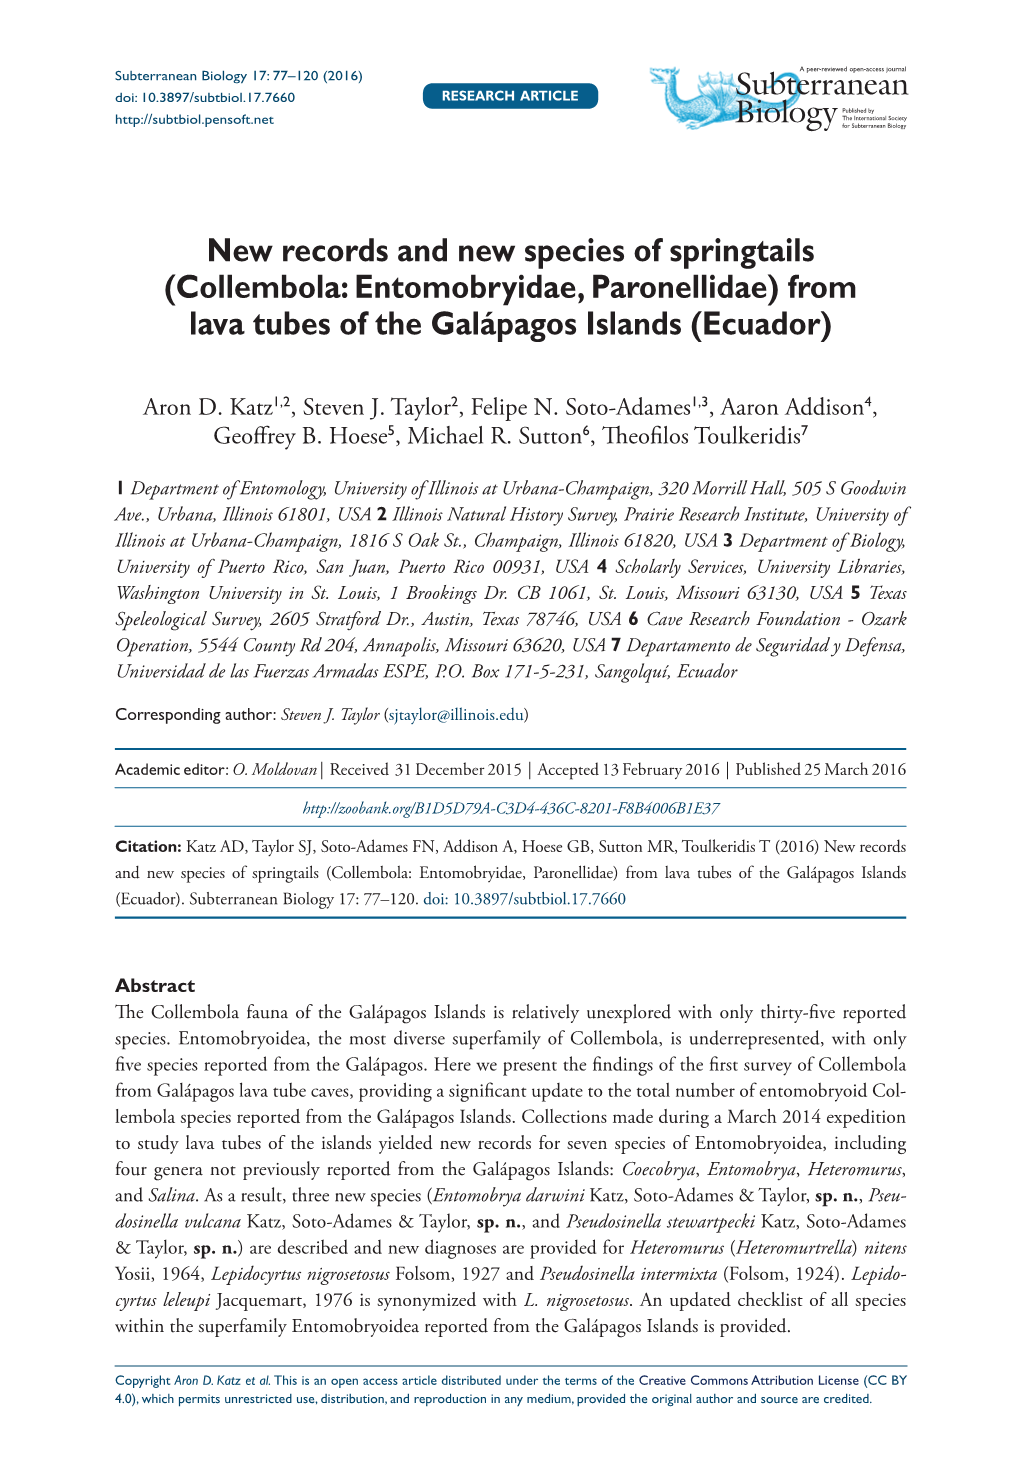 Collembola: Entomobryidae, Paronellidae) from Lava Tubes of the Galápagos Islands (Ecuador